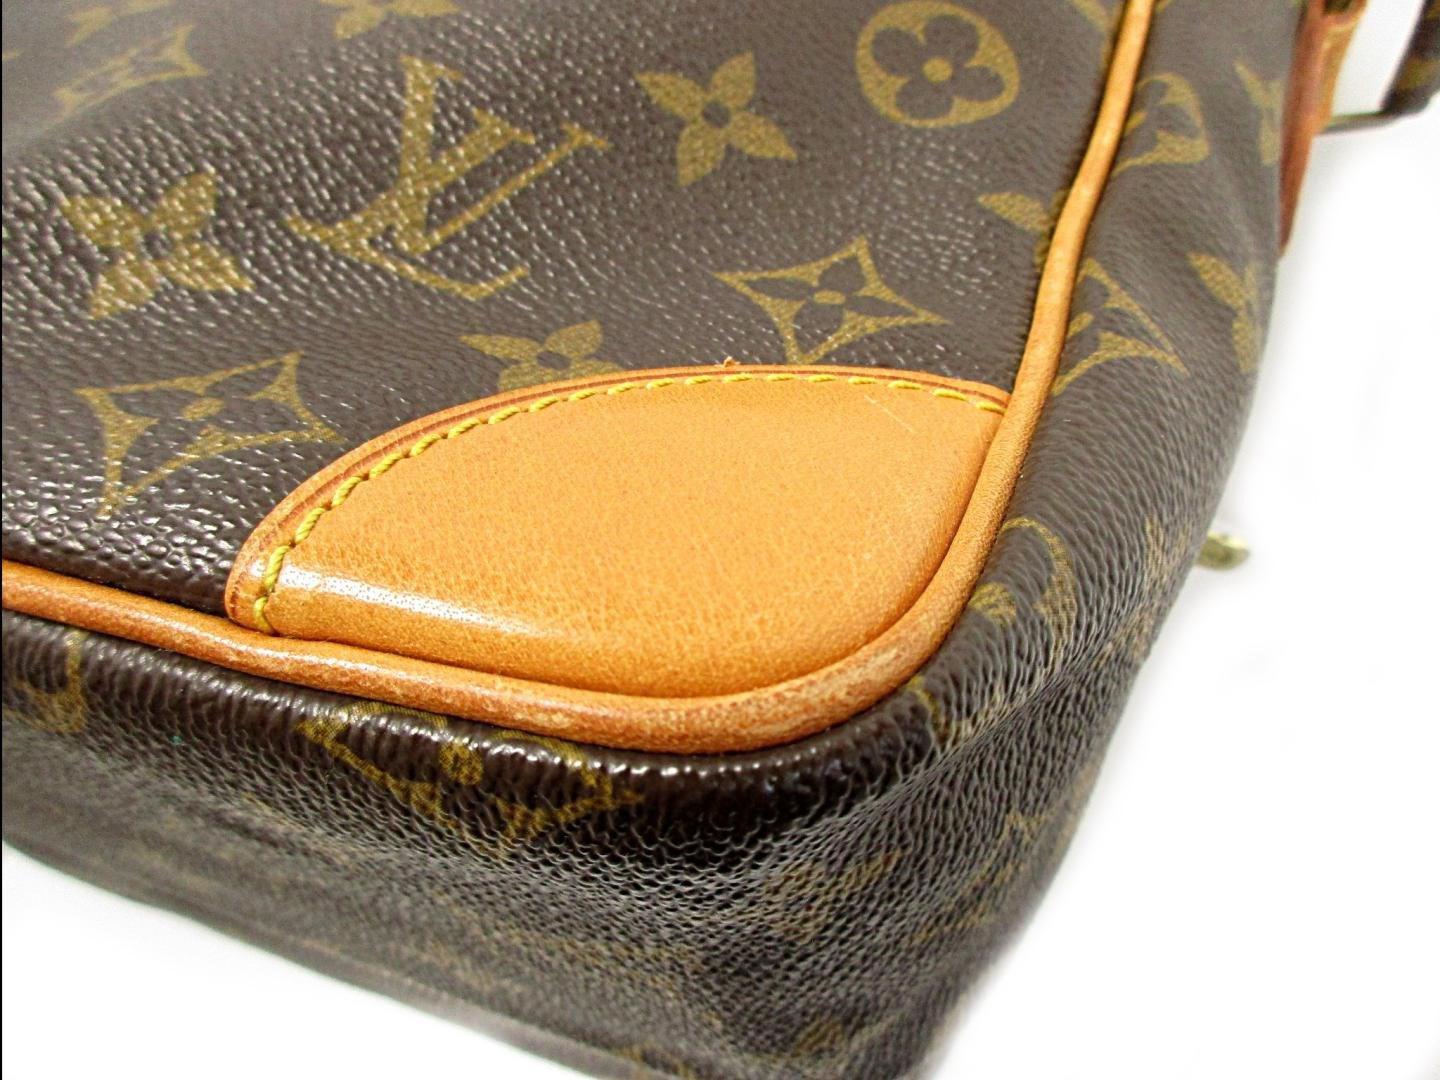 Louis Vuitton Amazon Gm Shoulder Bag Monogram Canvas M45232 in Brown - Lyst